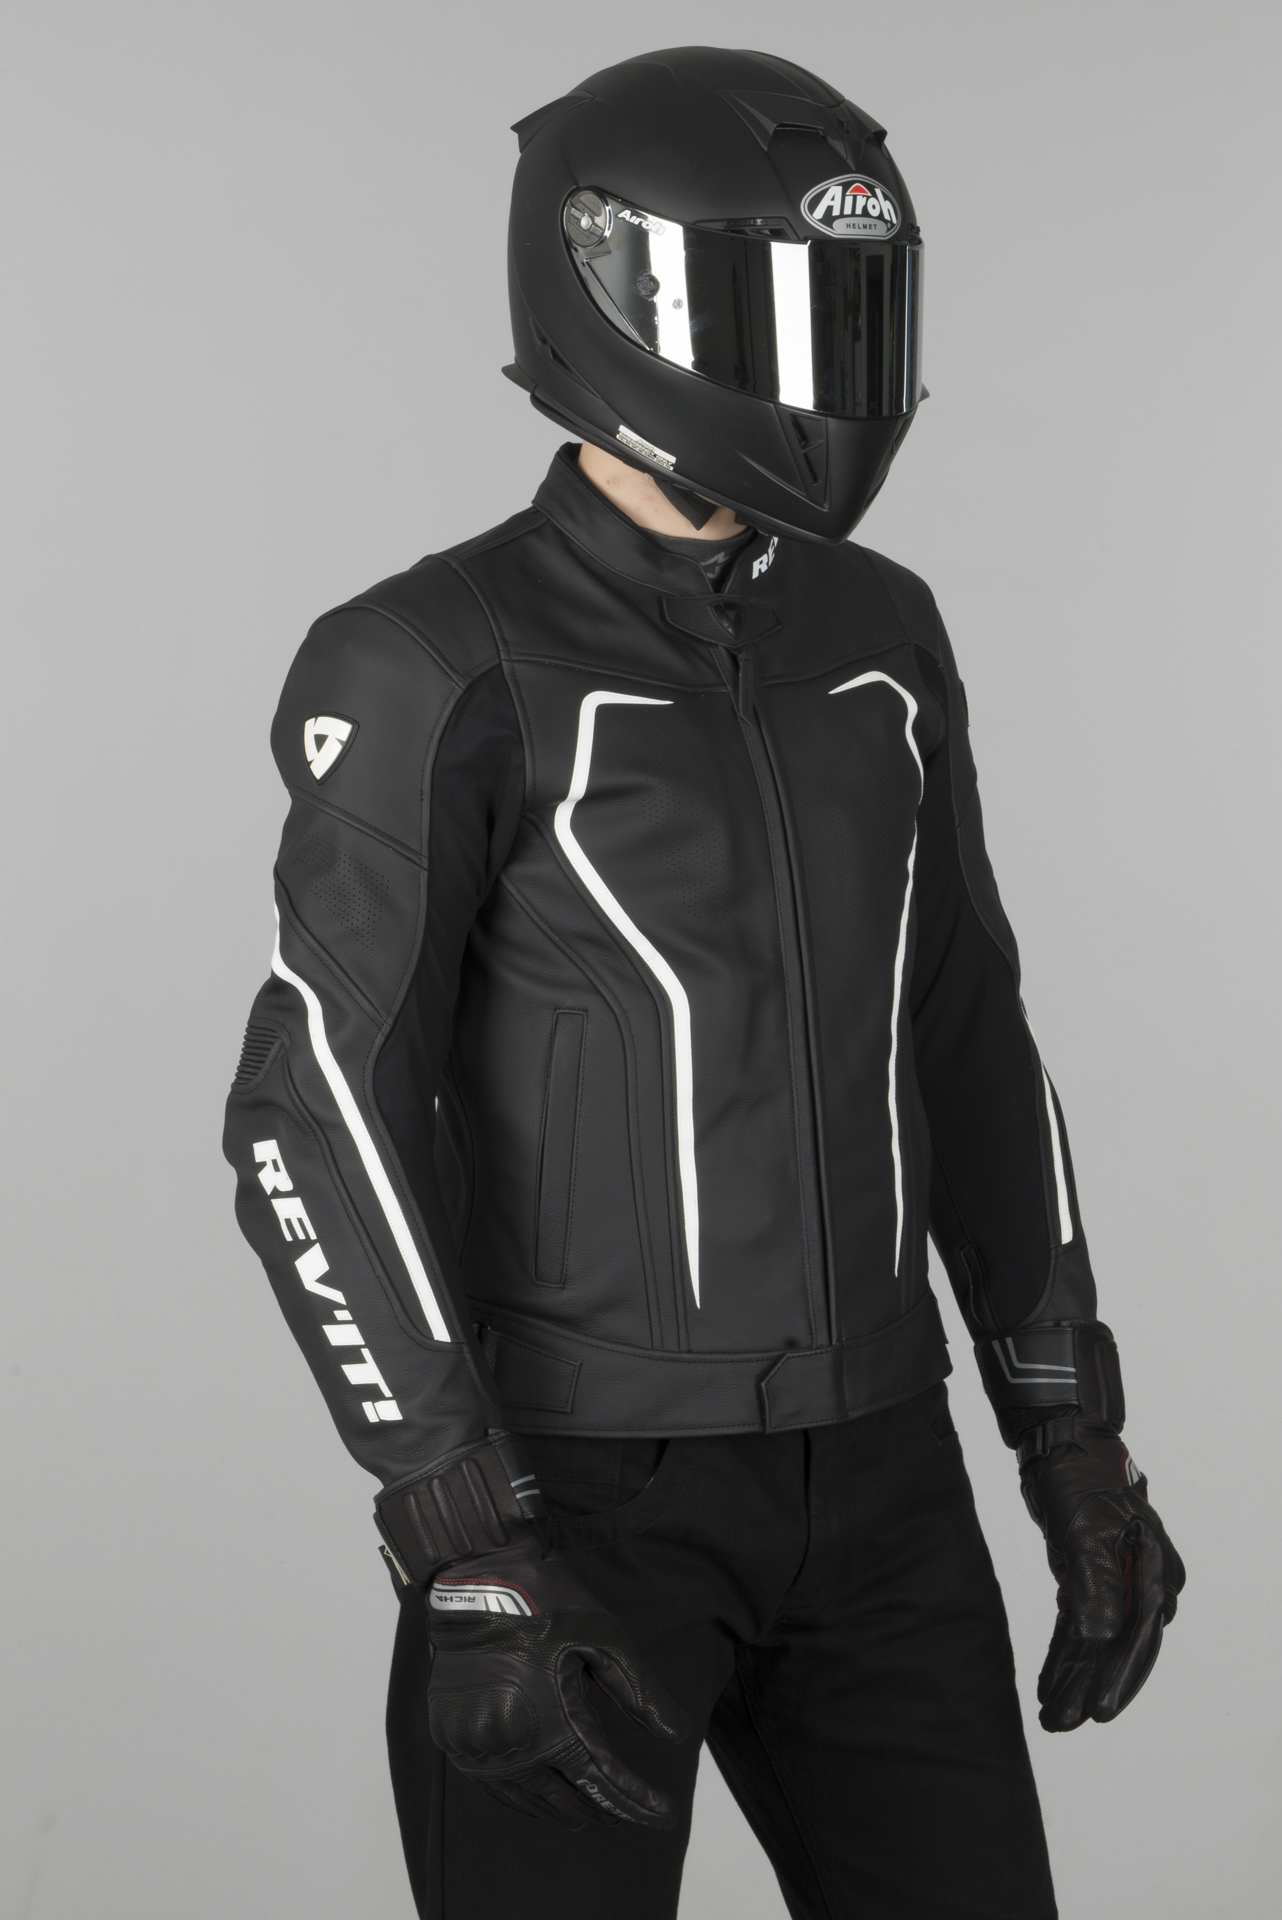 Motorcycle jacket Rev/'it Revit GT-R Air white Black perforated perforated jacket